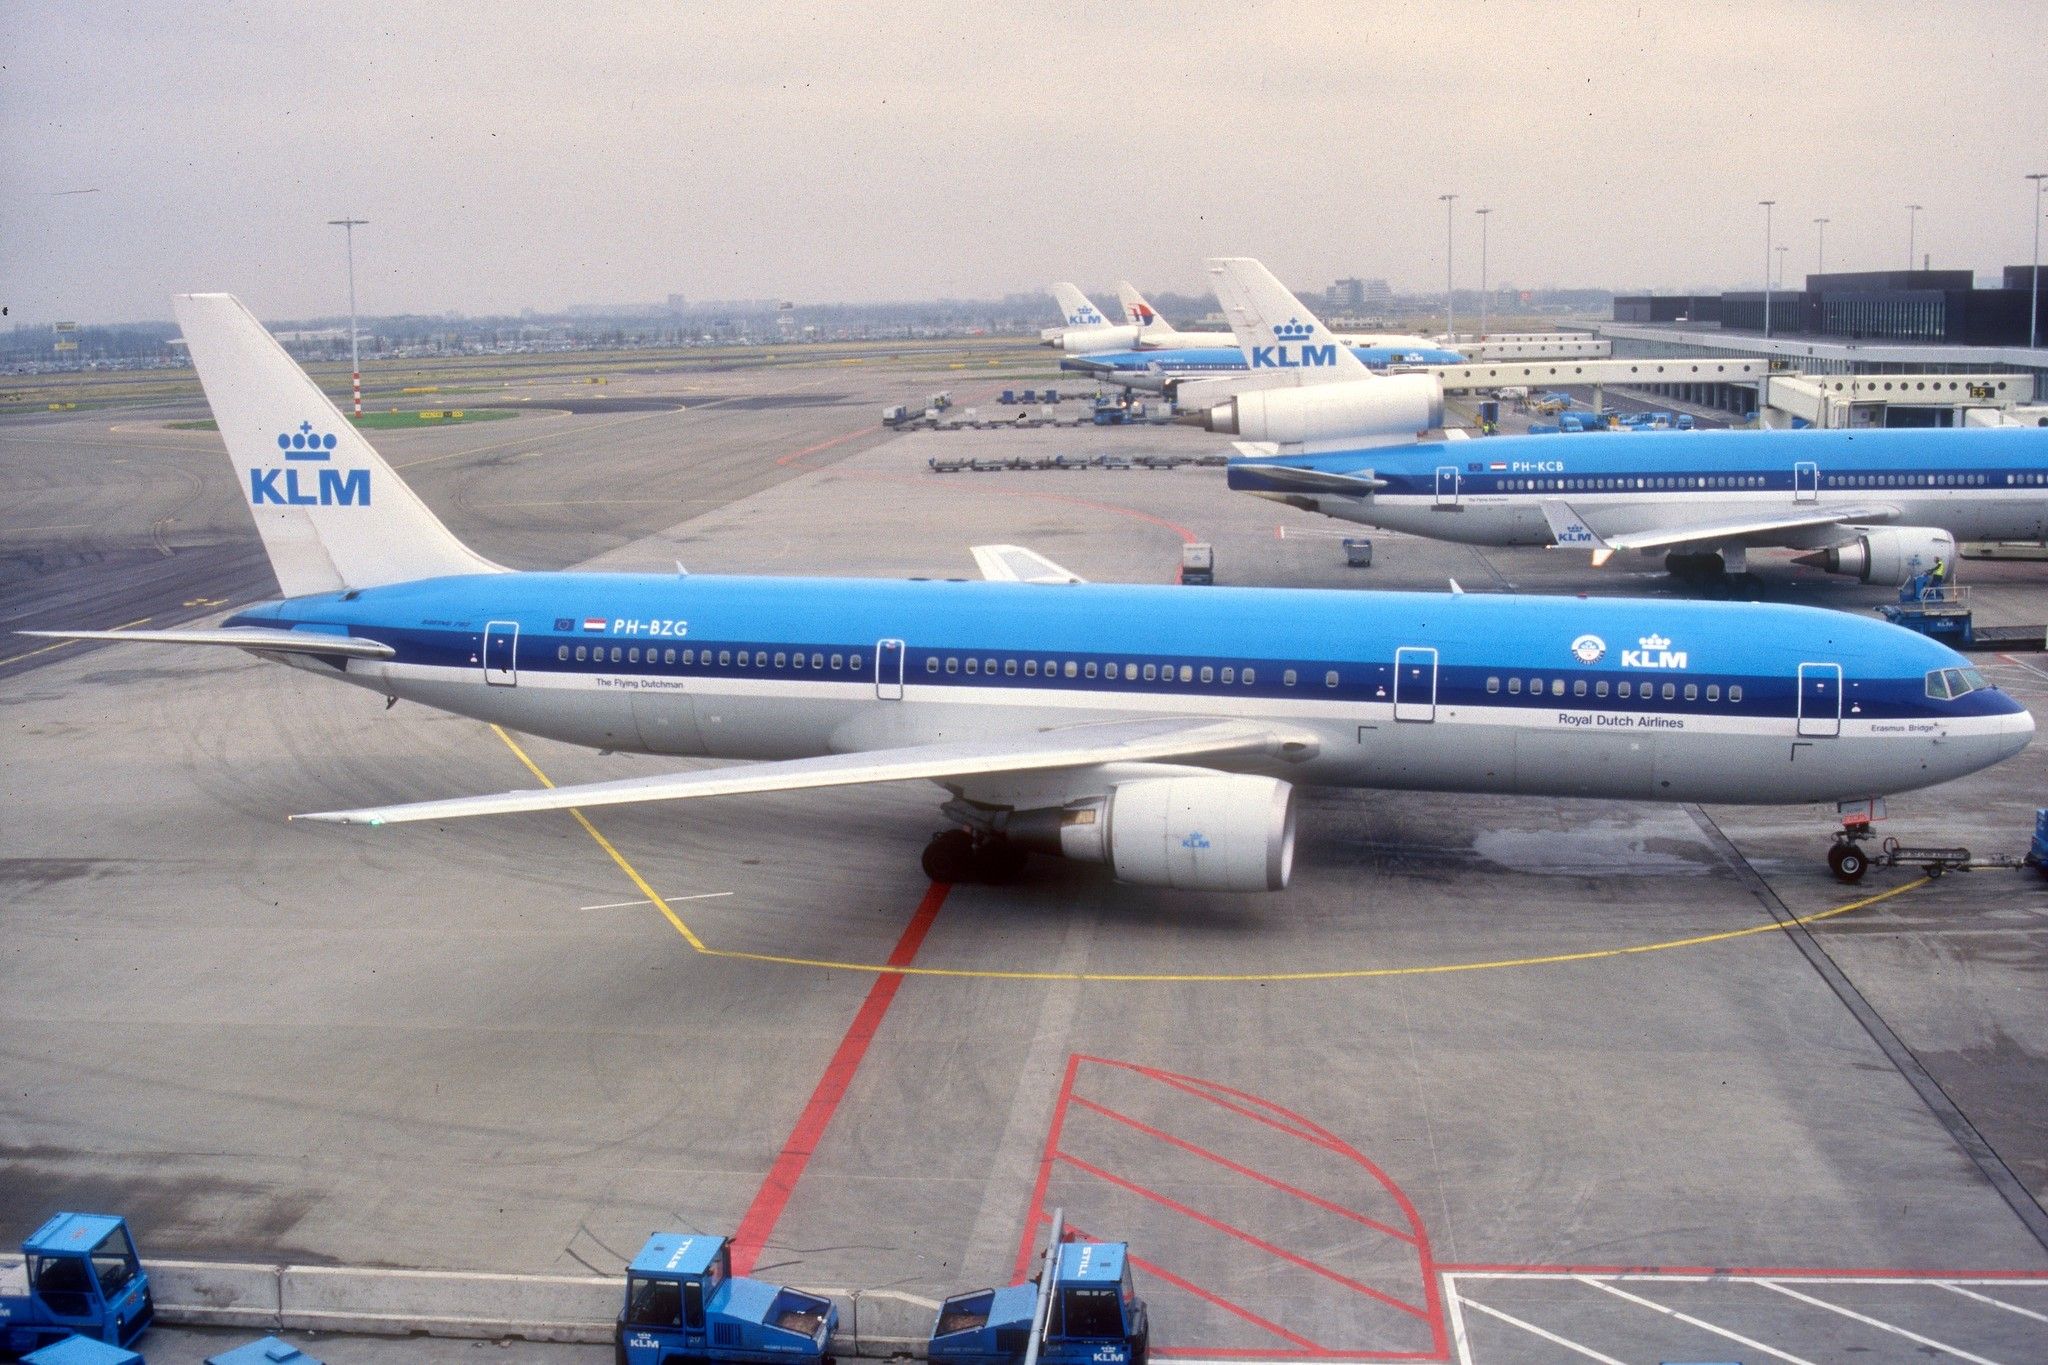 KLM Boeing 767 In Amsterdam